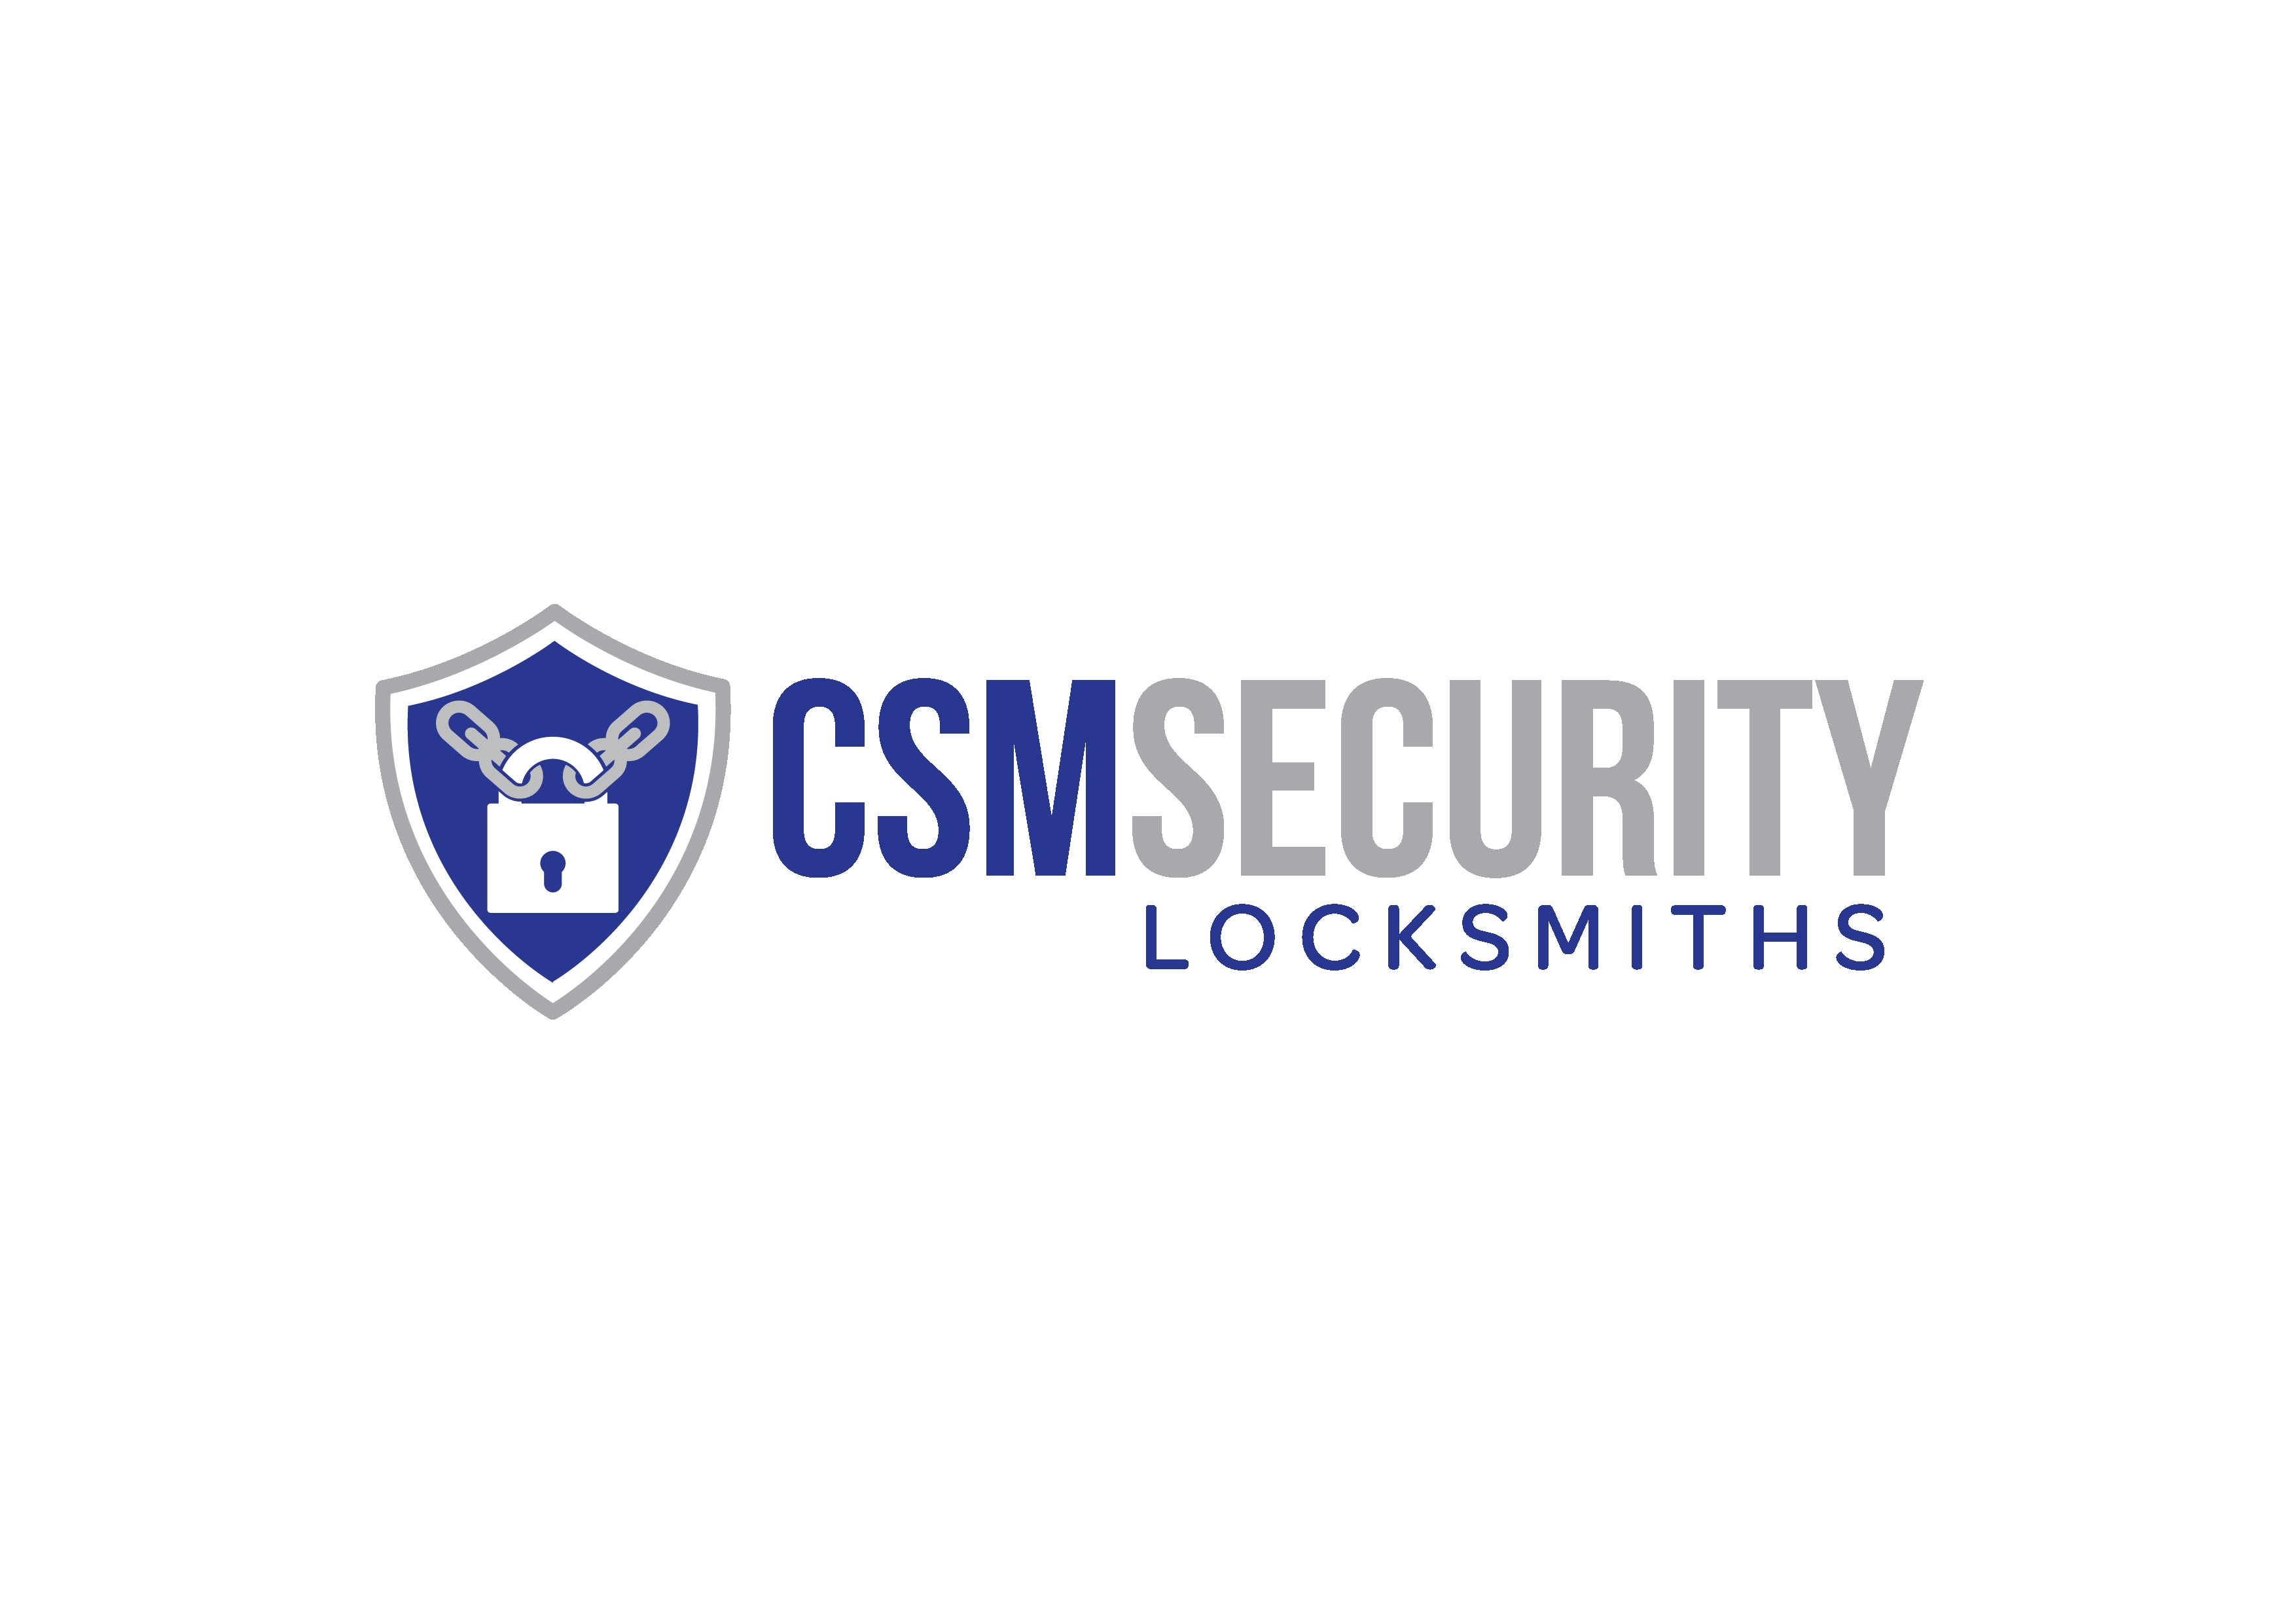 CSM Security Locksmiths